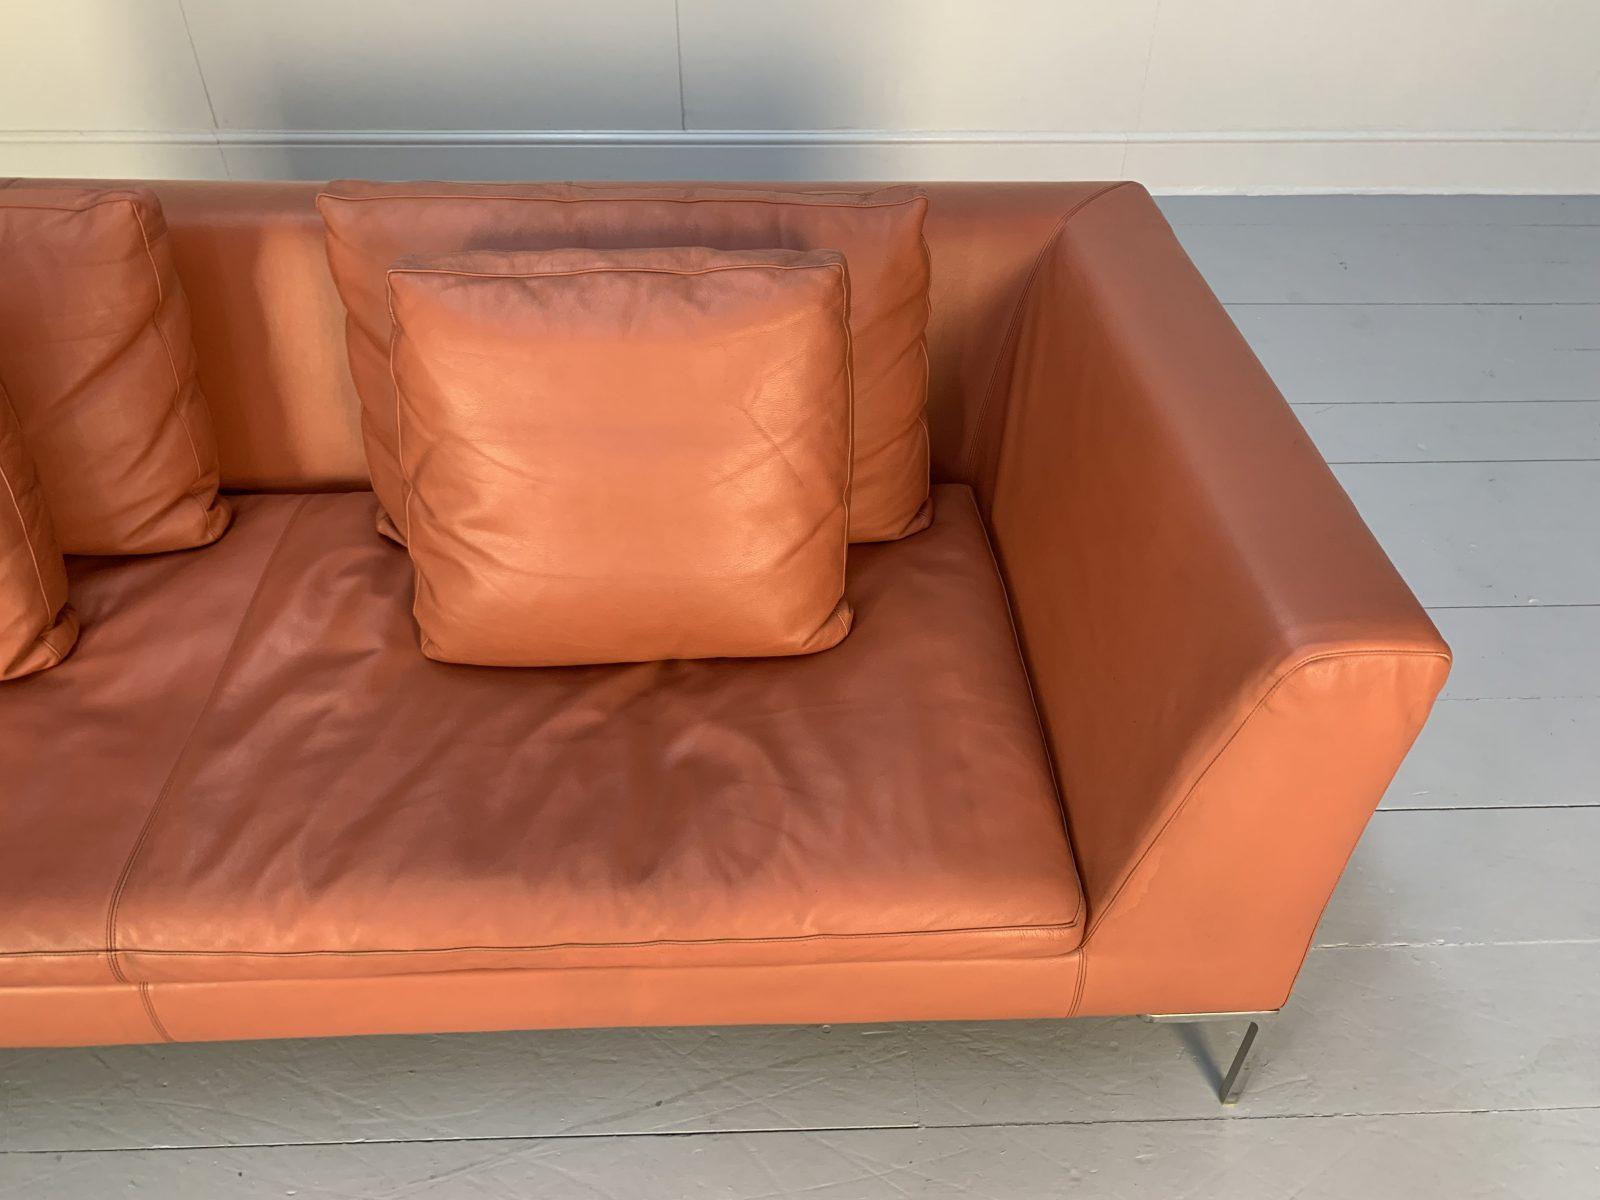 B&B Italia “Charles” Sofa – “CH230” 3-Seat – In Dark Pink “Gamma” Leather For Sale 8